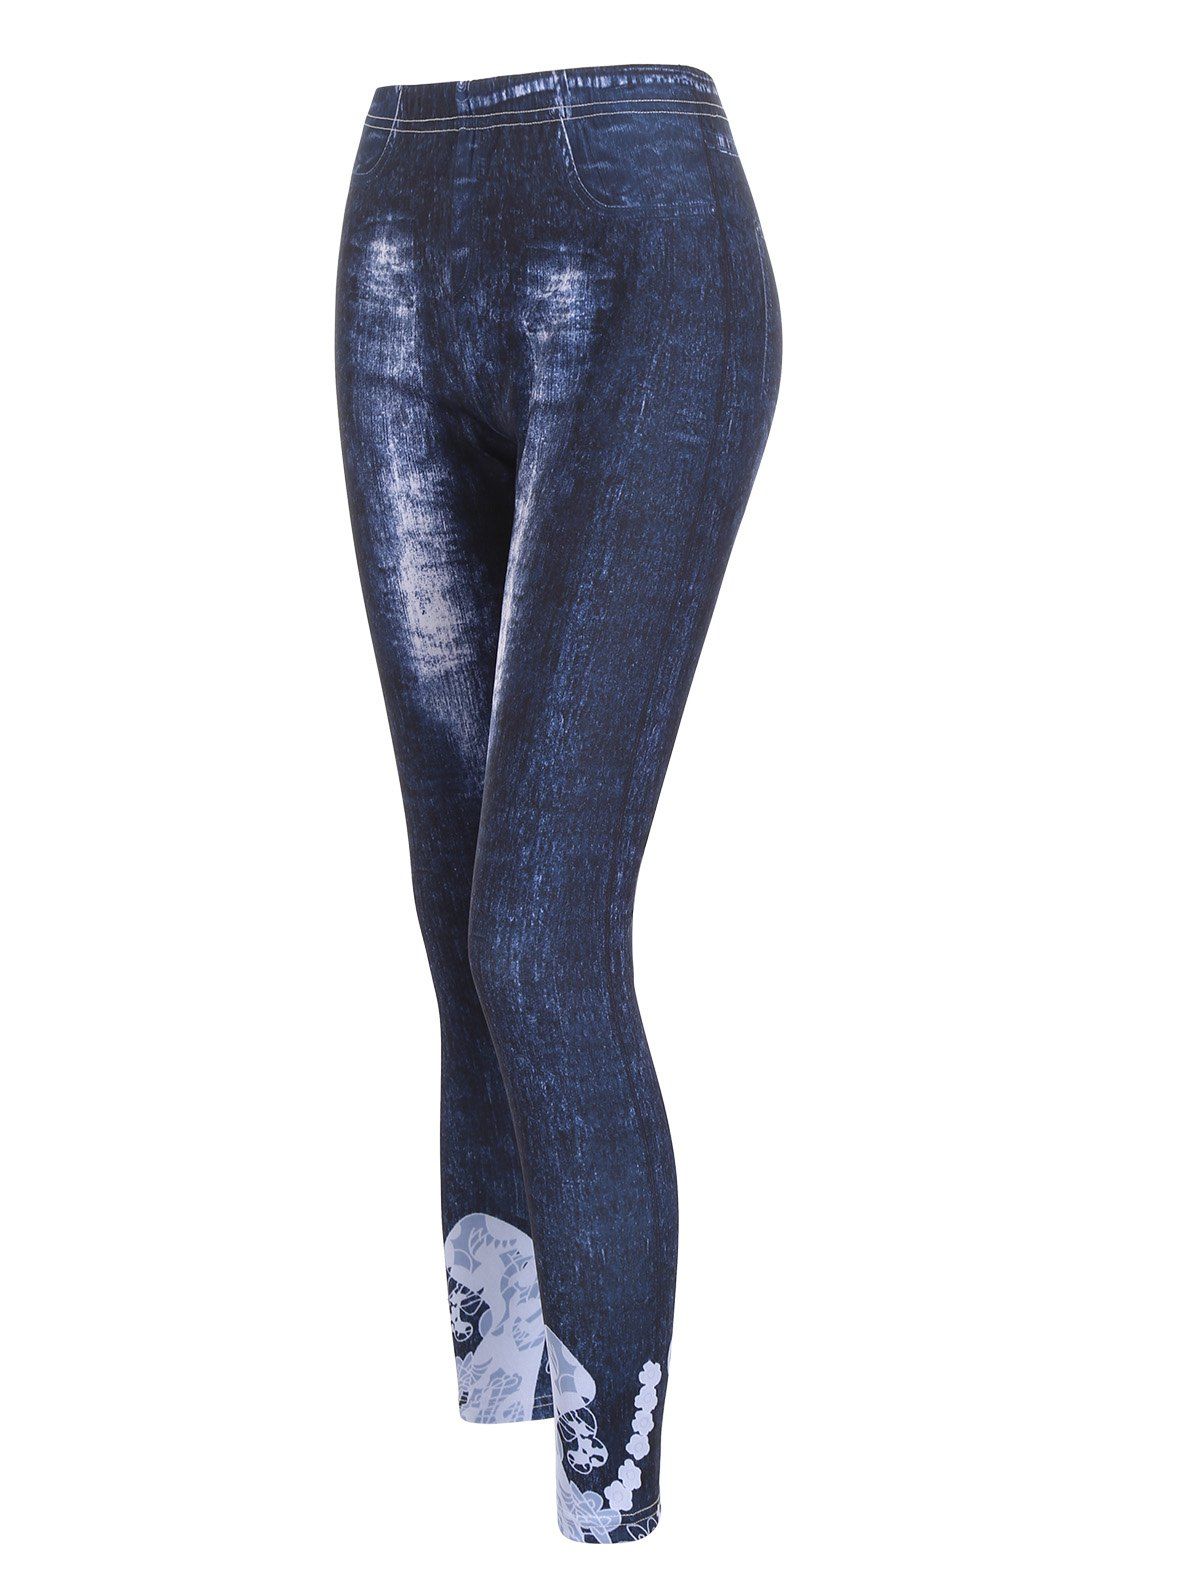 Skinny Jeggings Faux Denim 3D Print Elastic High Waisted Jeggings Casual Leggings - DEEP BLUE 2XL